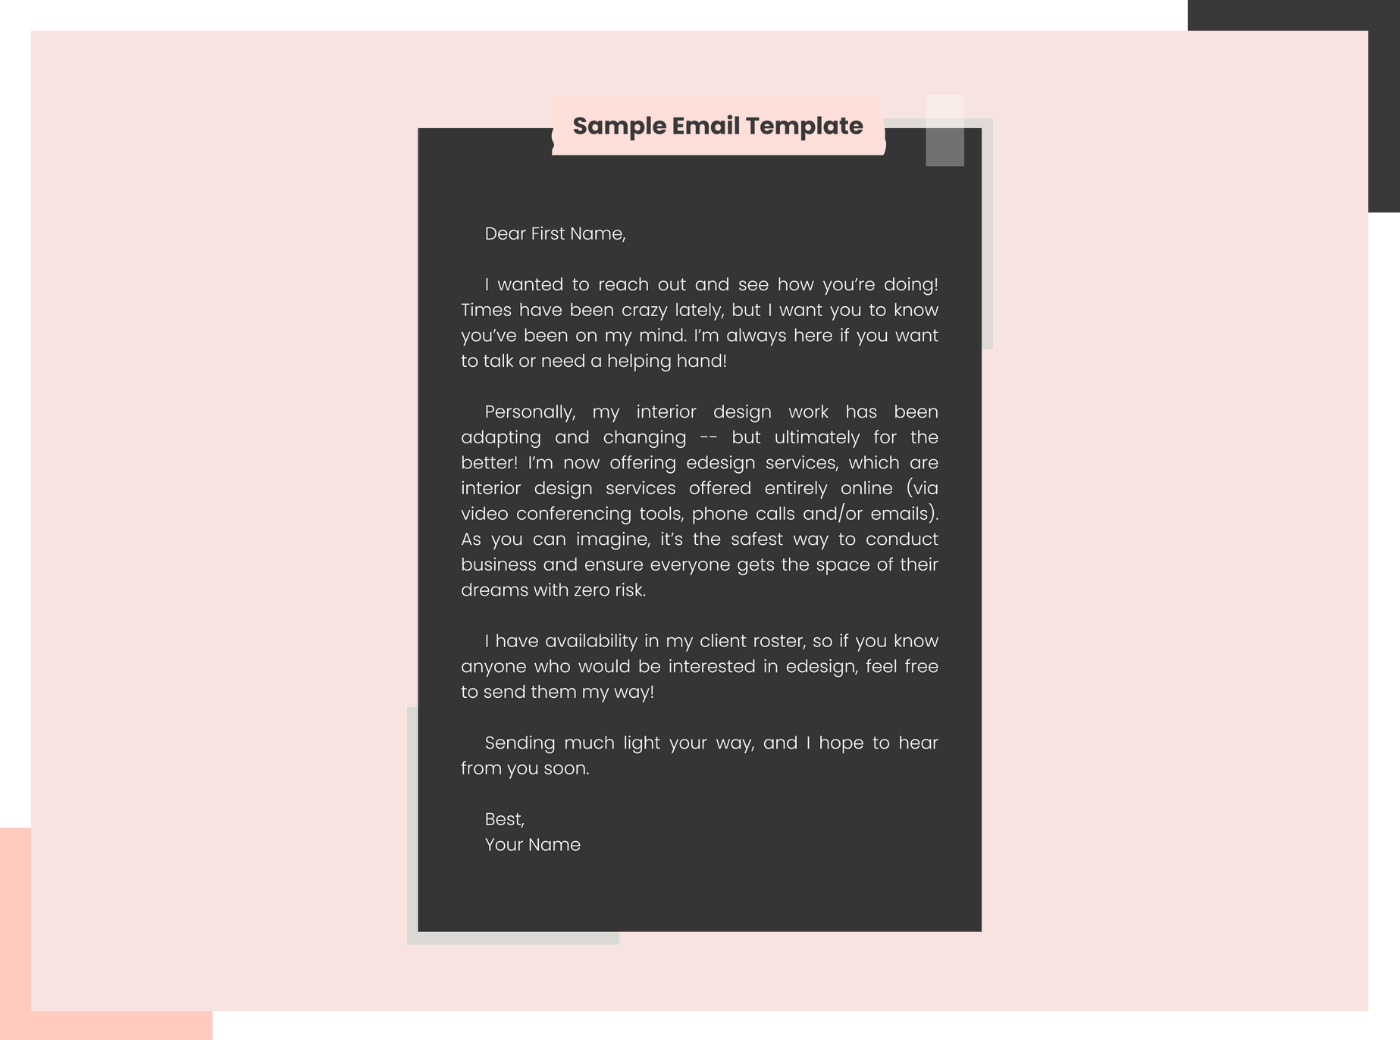 E-design sample email template